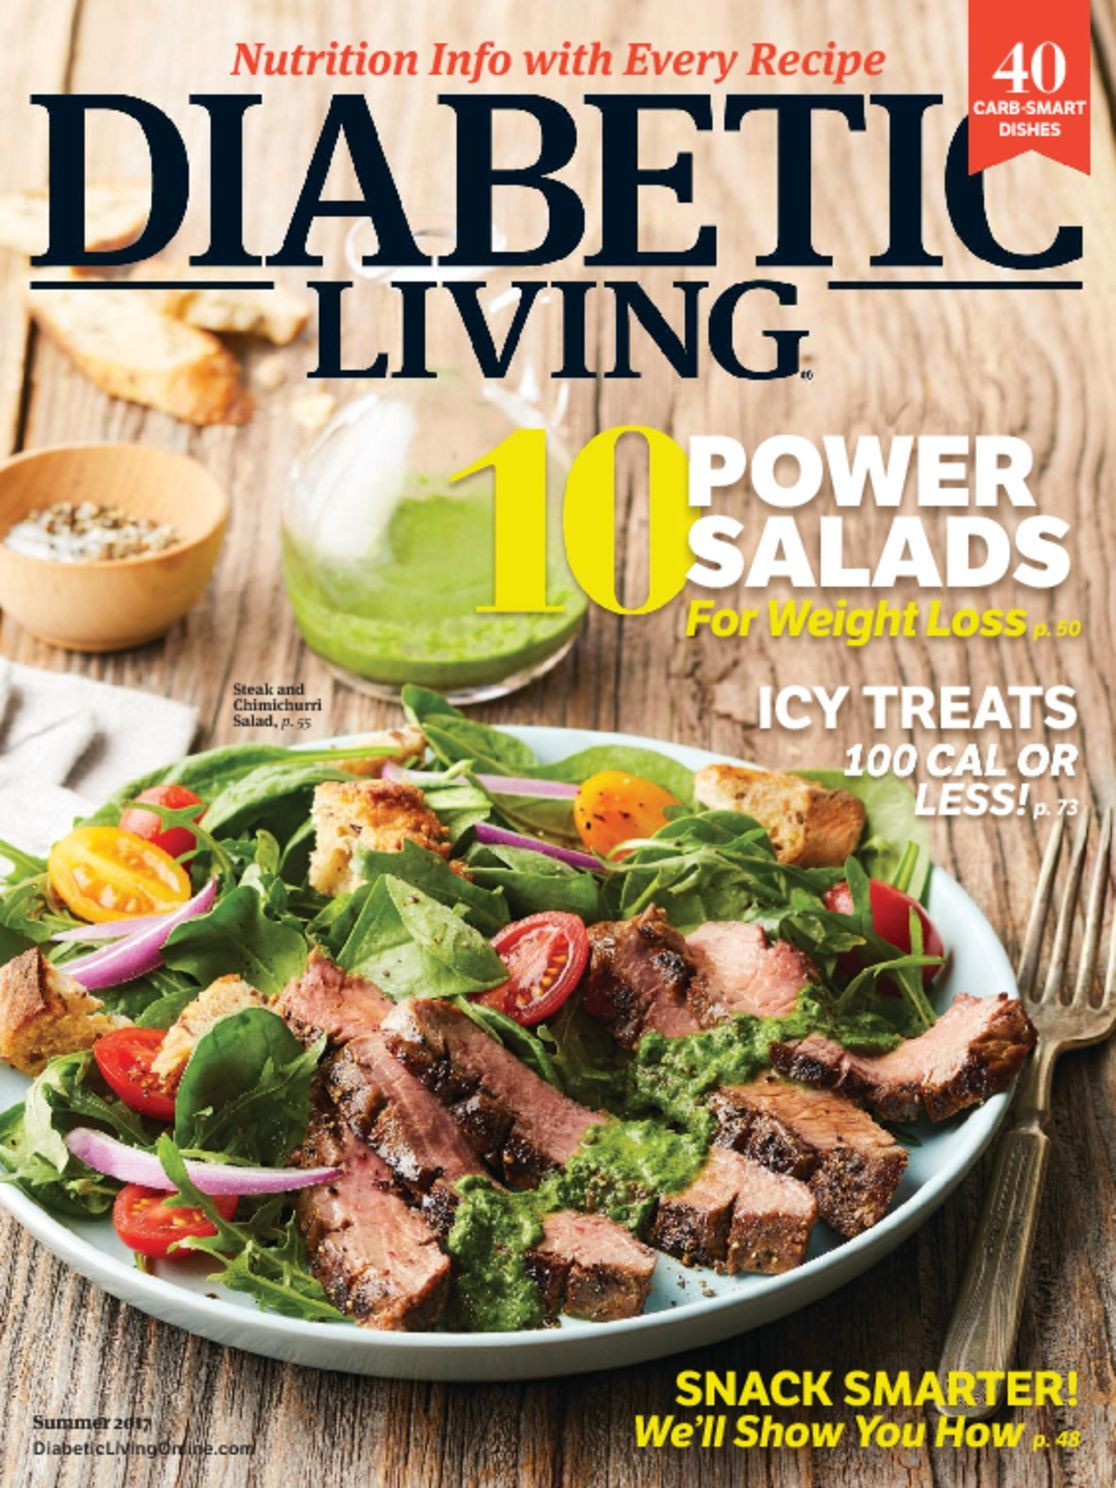 Diabetic Living Magazine Recipes
 Diabetic Living Magazine DiscountMags